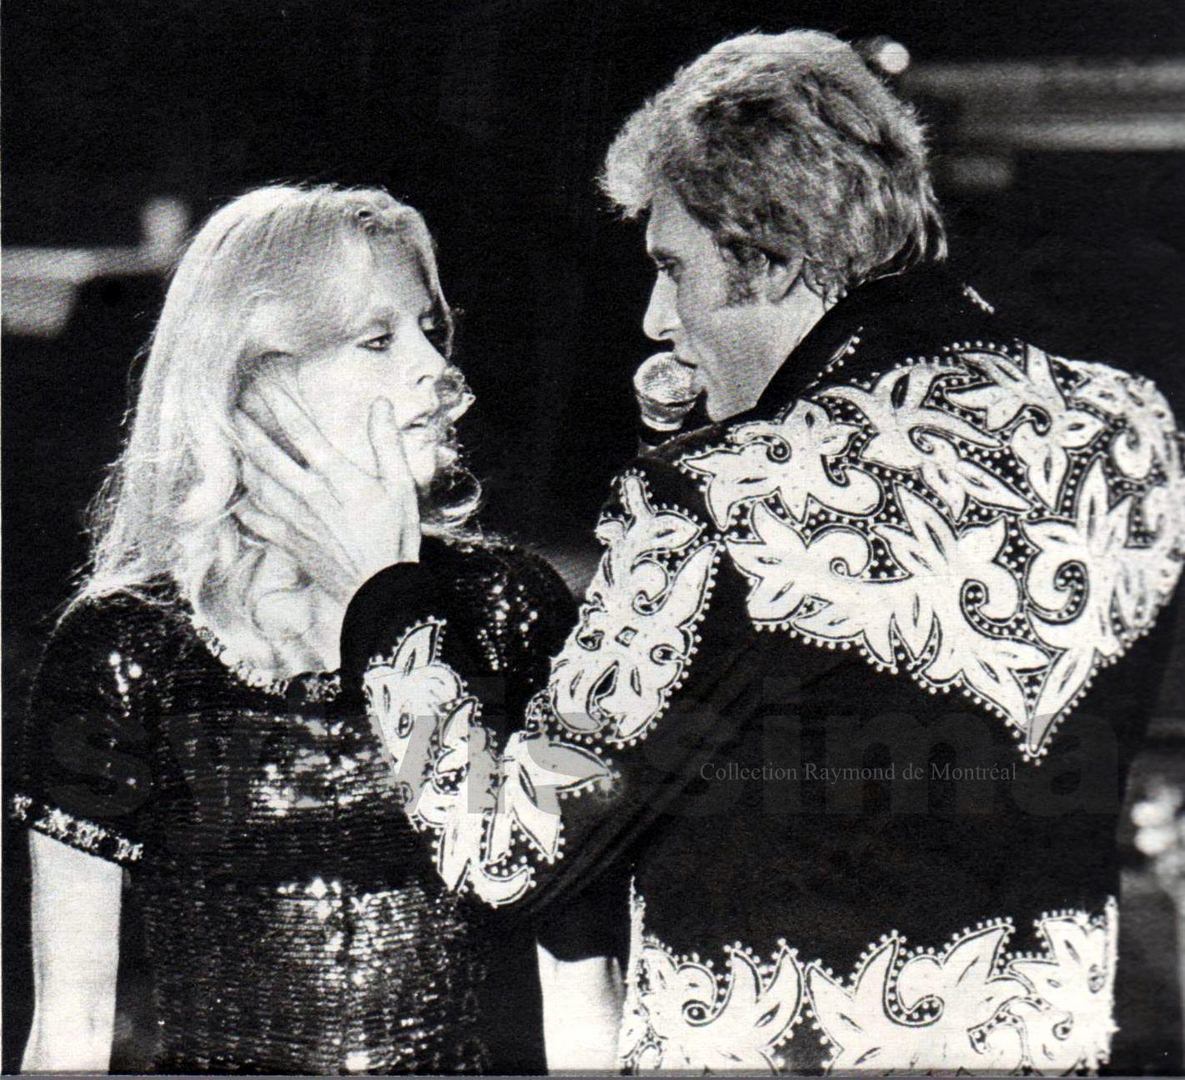 Sylvie Vartan et Johnny Hallyday au Québec 1975 "Te tuer d'amour"